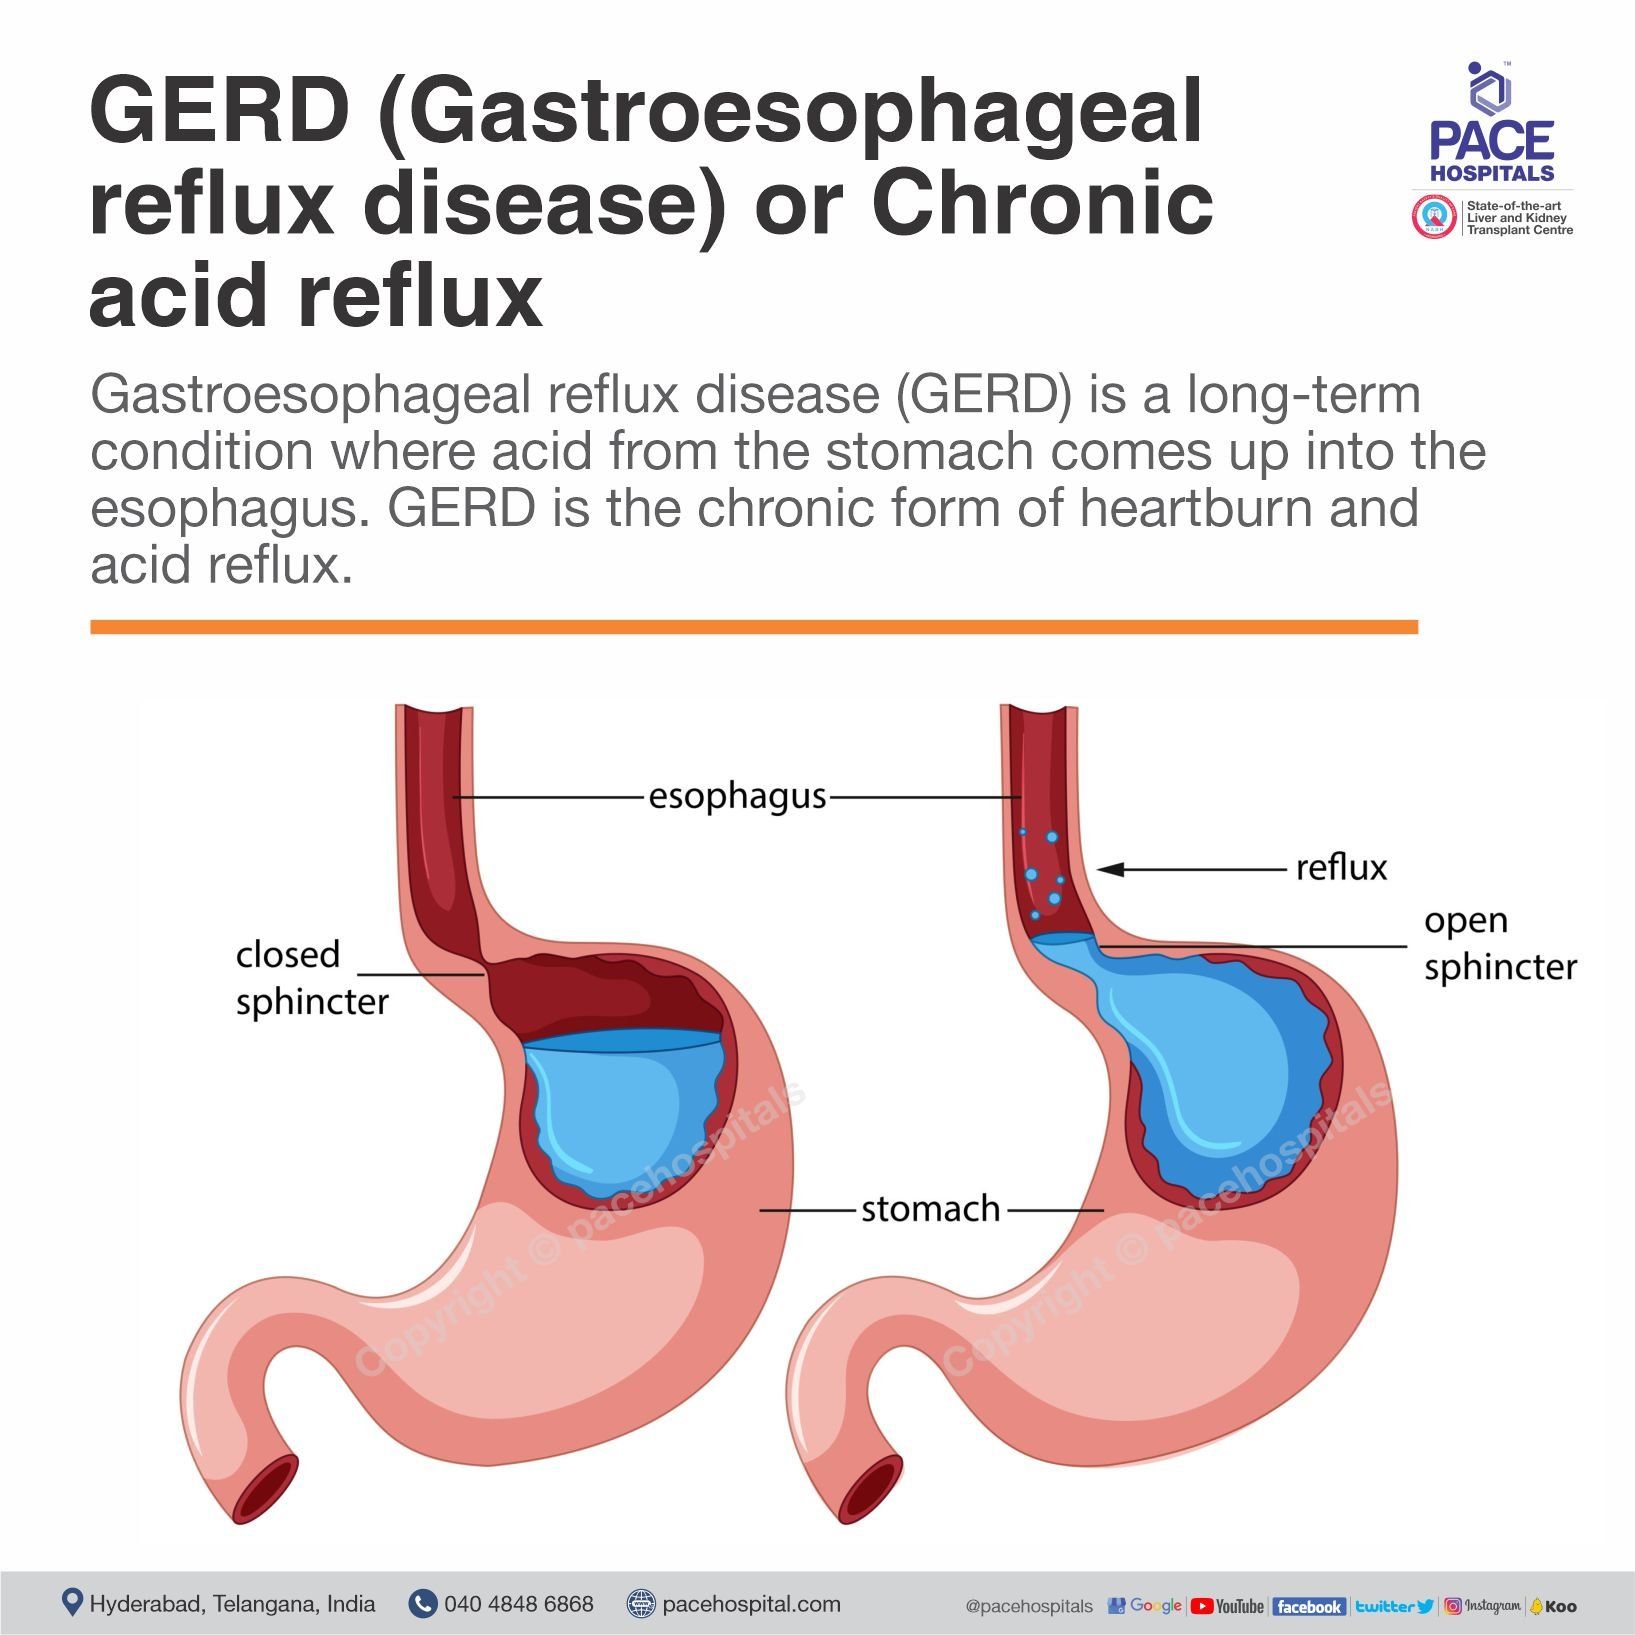 What is GERD (Gastroesophageal reflux disease) or chronic acid reflux